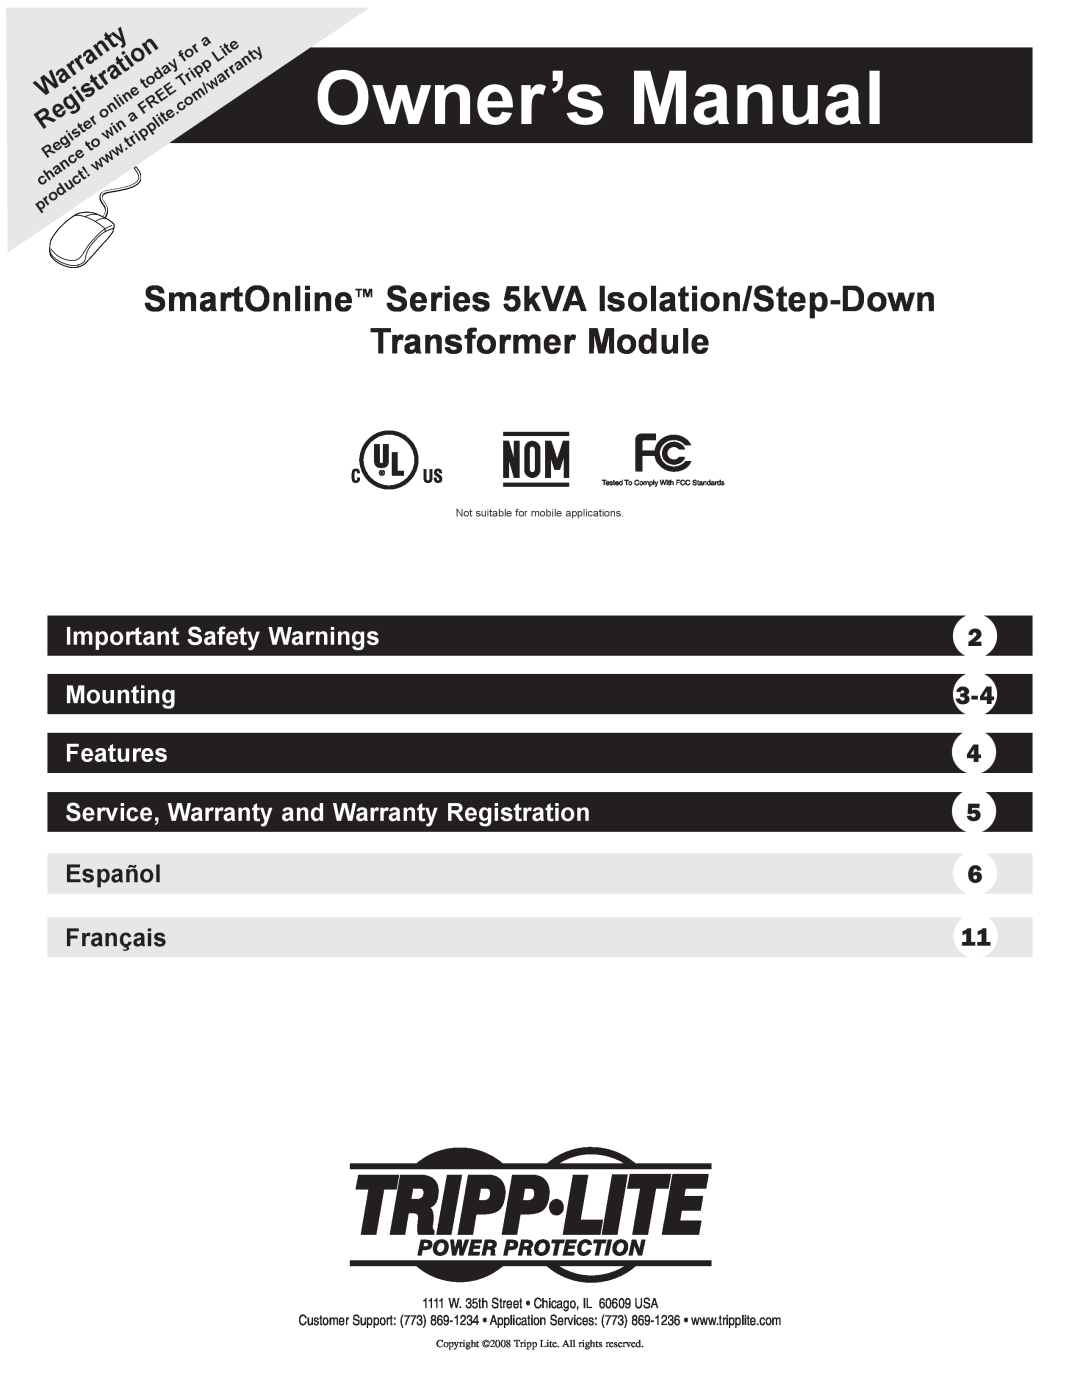 Tripp Lite owner manual Owner’s Manual, SmartOnline Series 5kVA Isolation/Step-Down Transformer Module, Mounting, Lite 